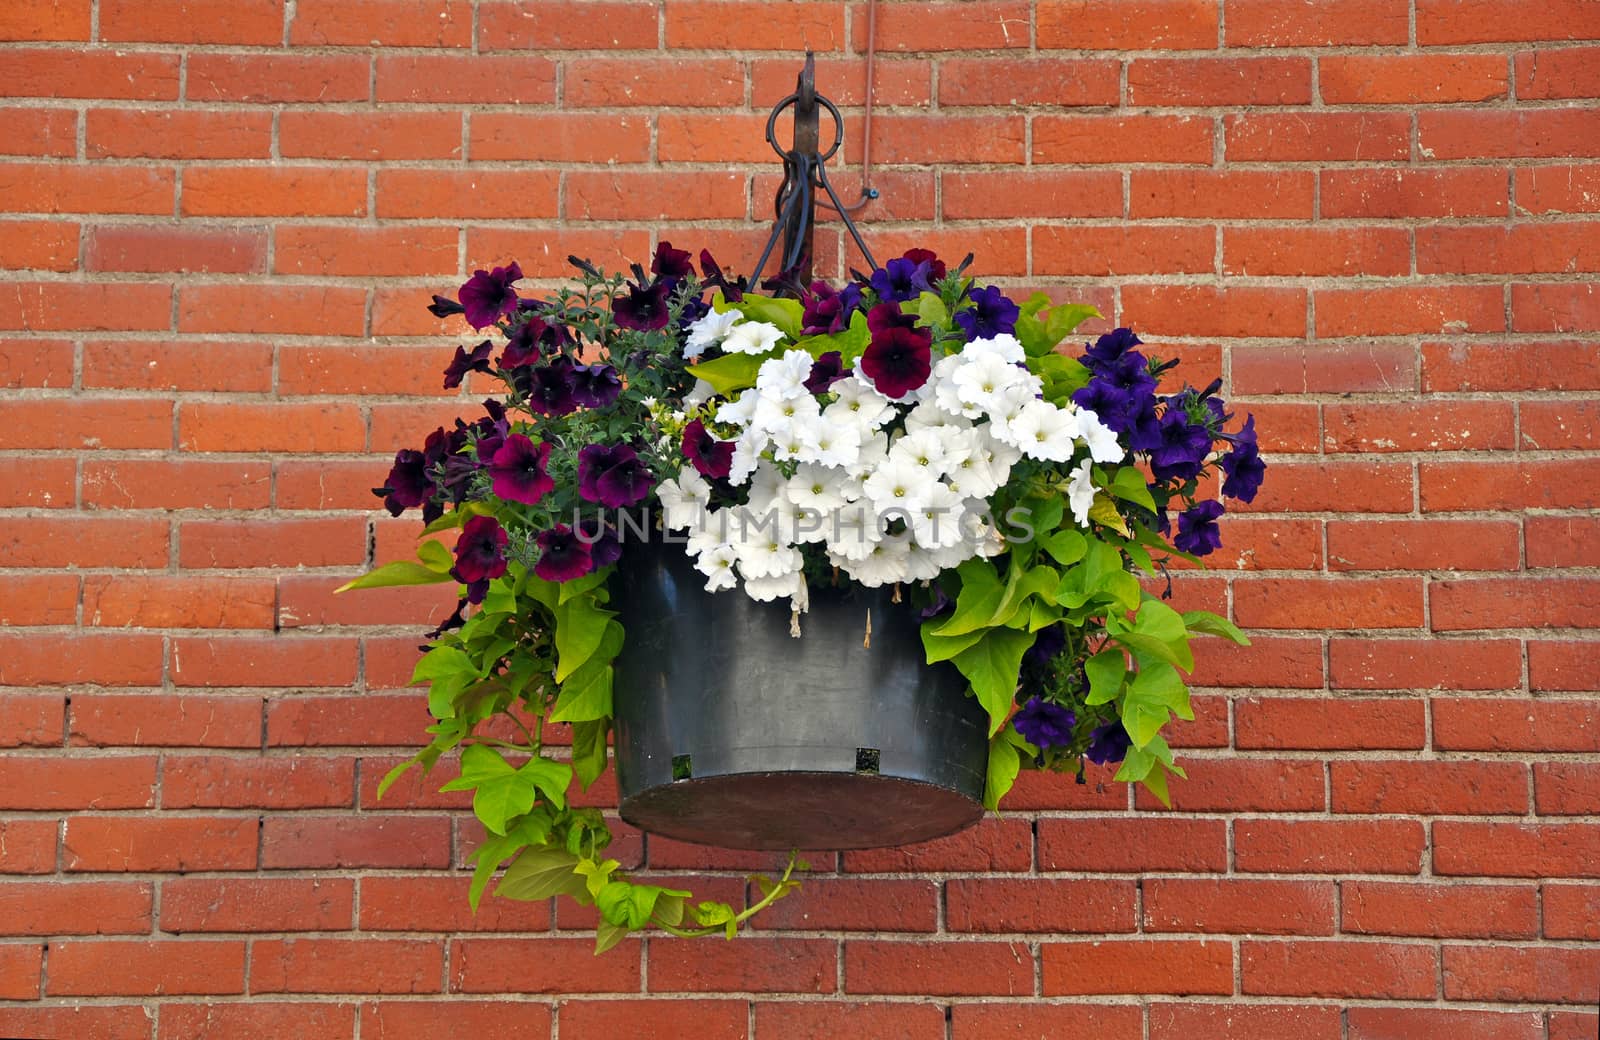 Beautiful petunias hanging basked on old brick wall